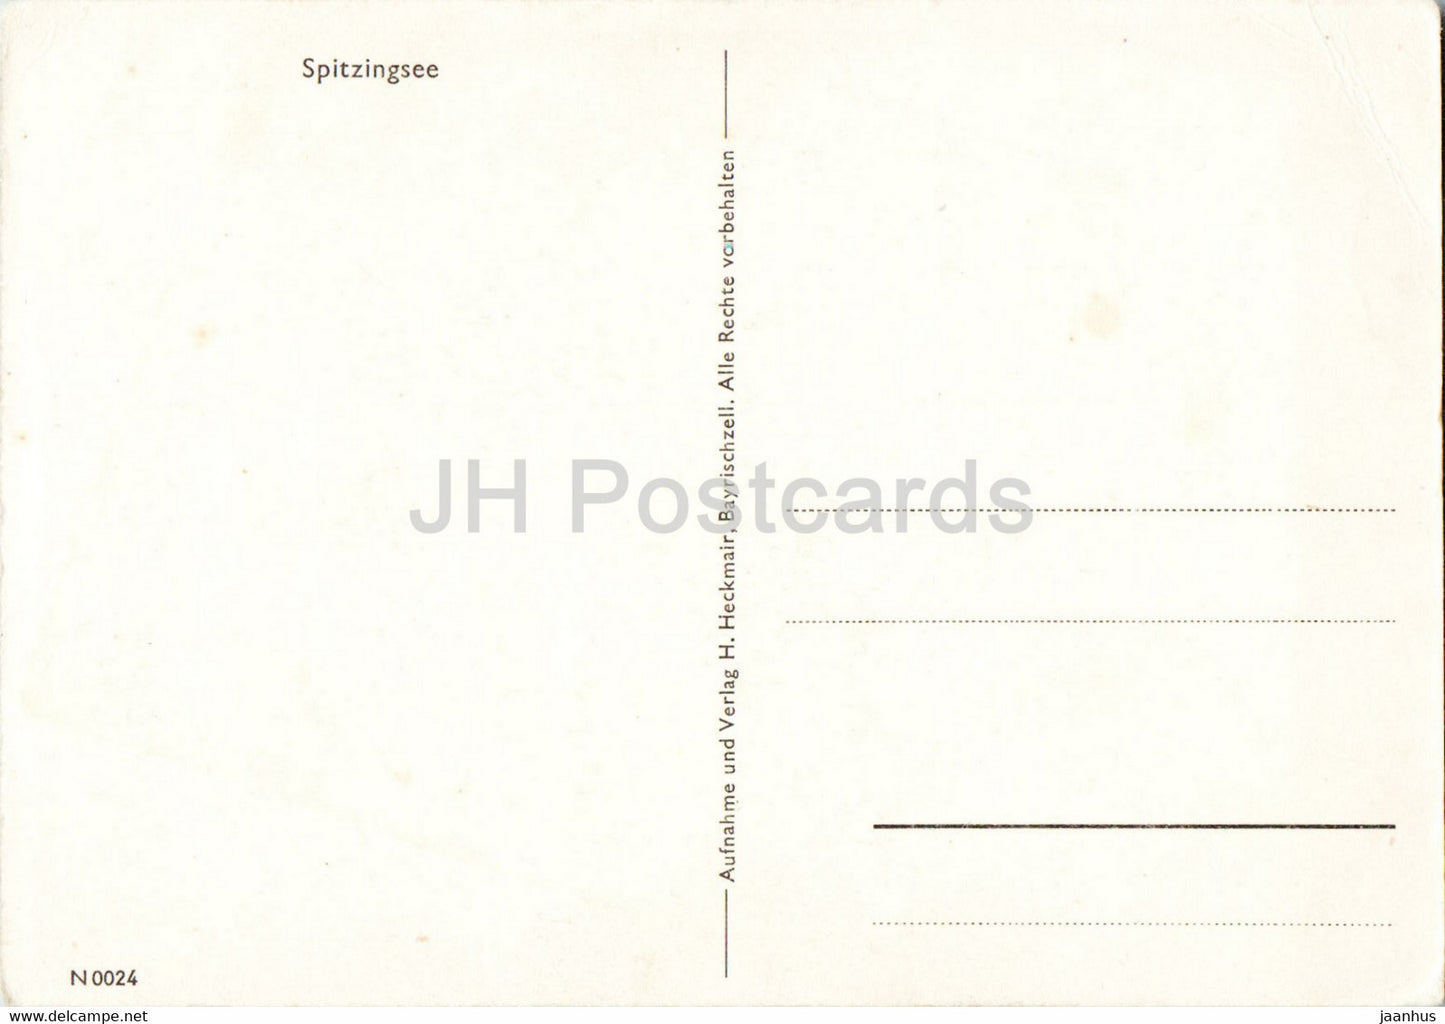 Spitzingsee - 0024 - old postcard - Germany - unused